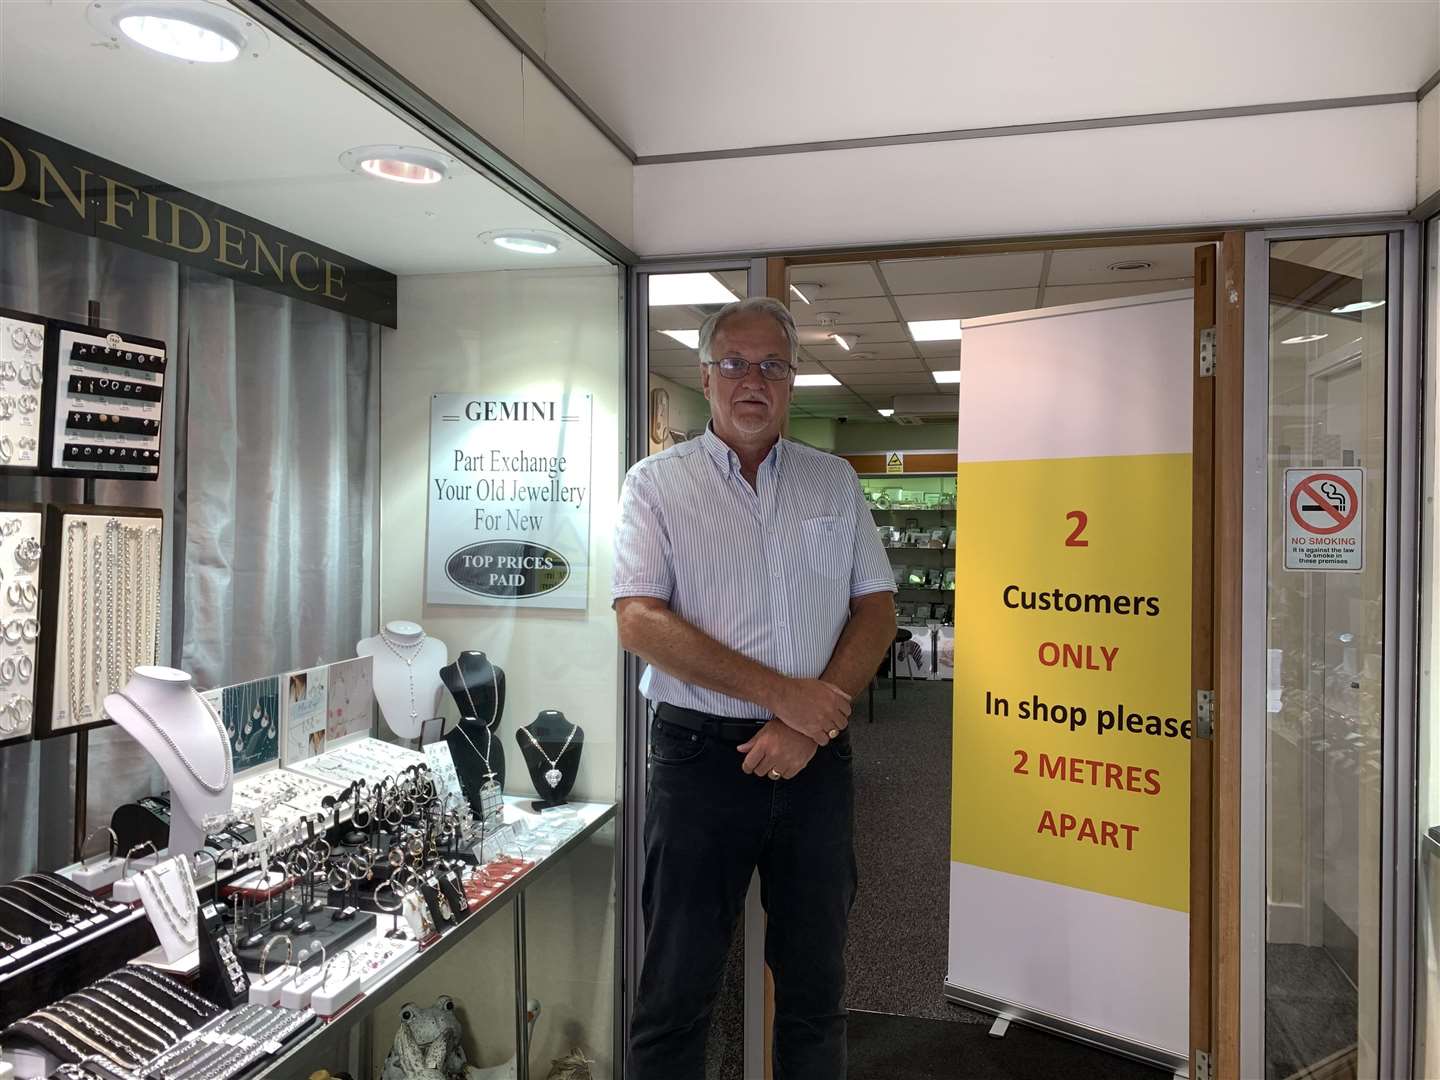 Tony Mankelow, owner of Gemini jewellers in Sheerness High Street